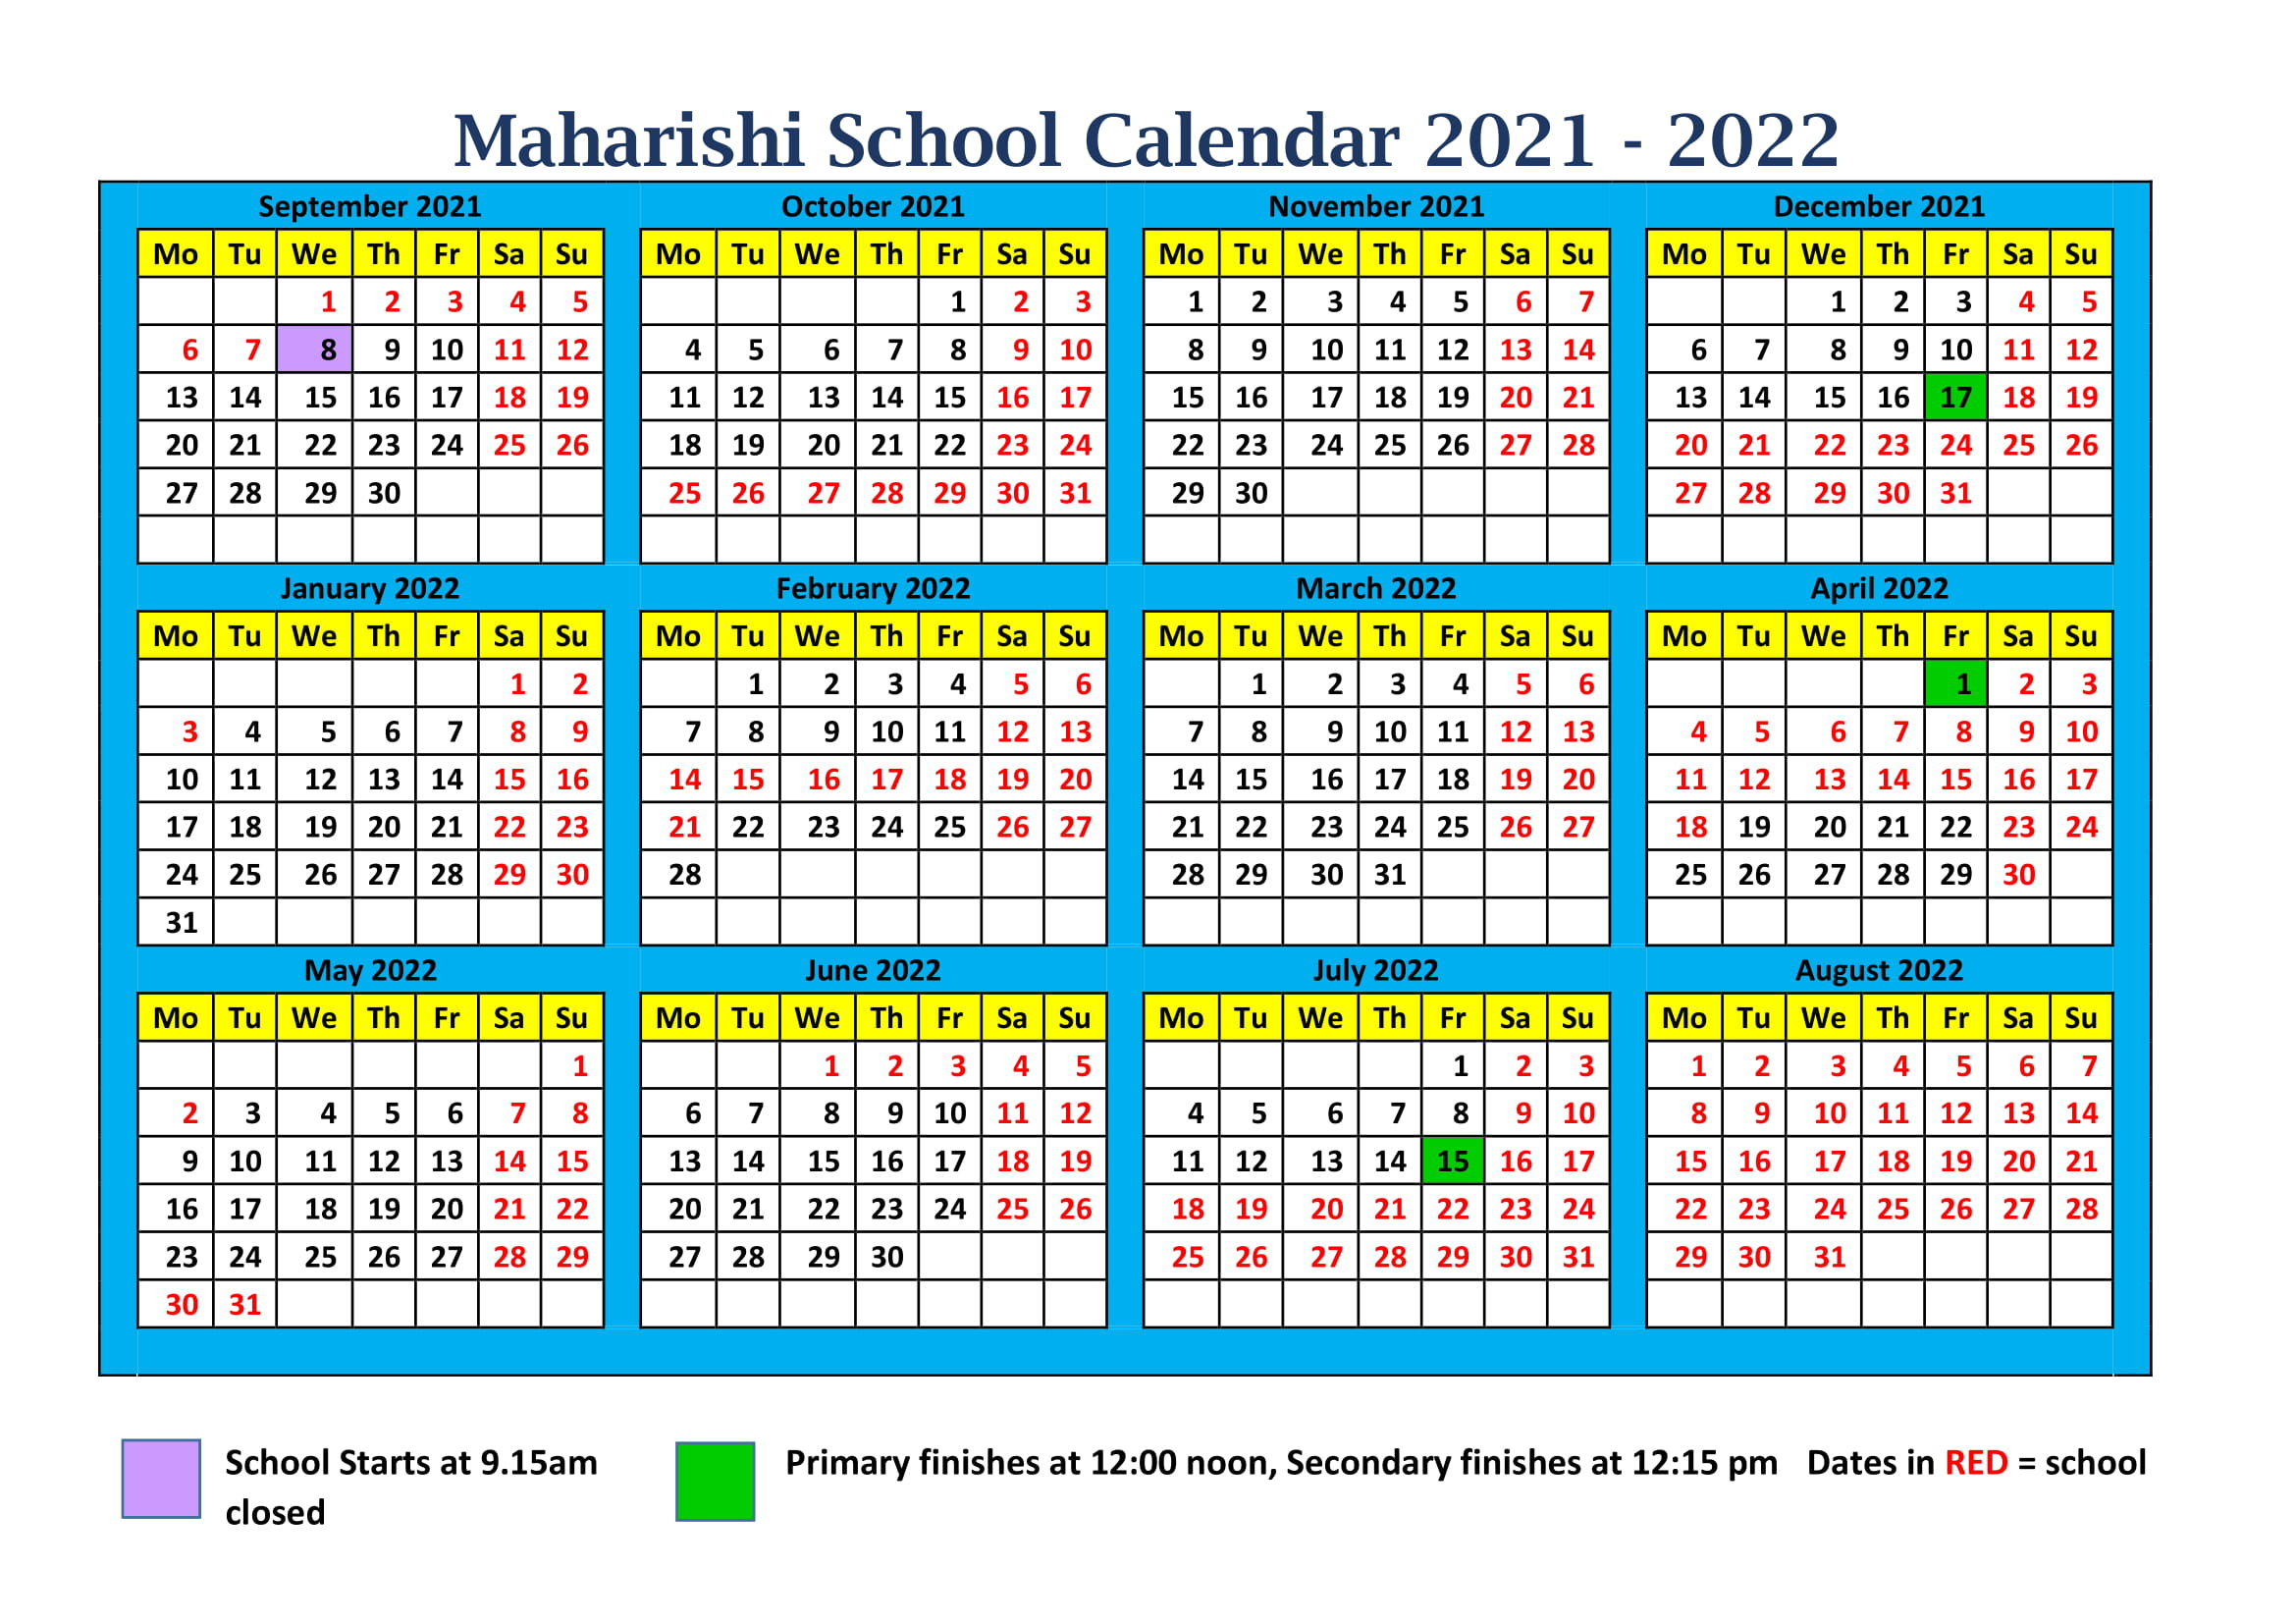 Calendar 2021-2022 - Maharishi School